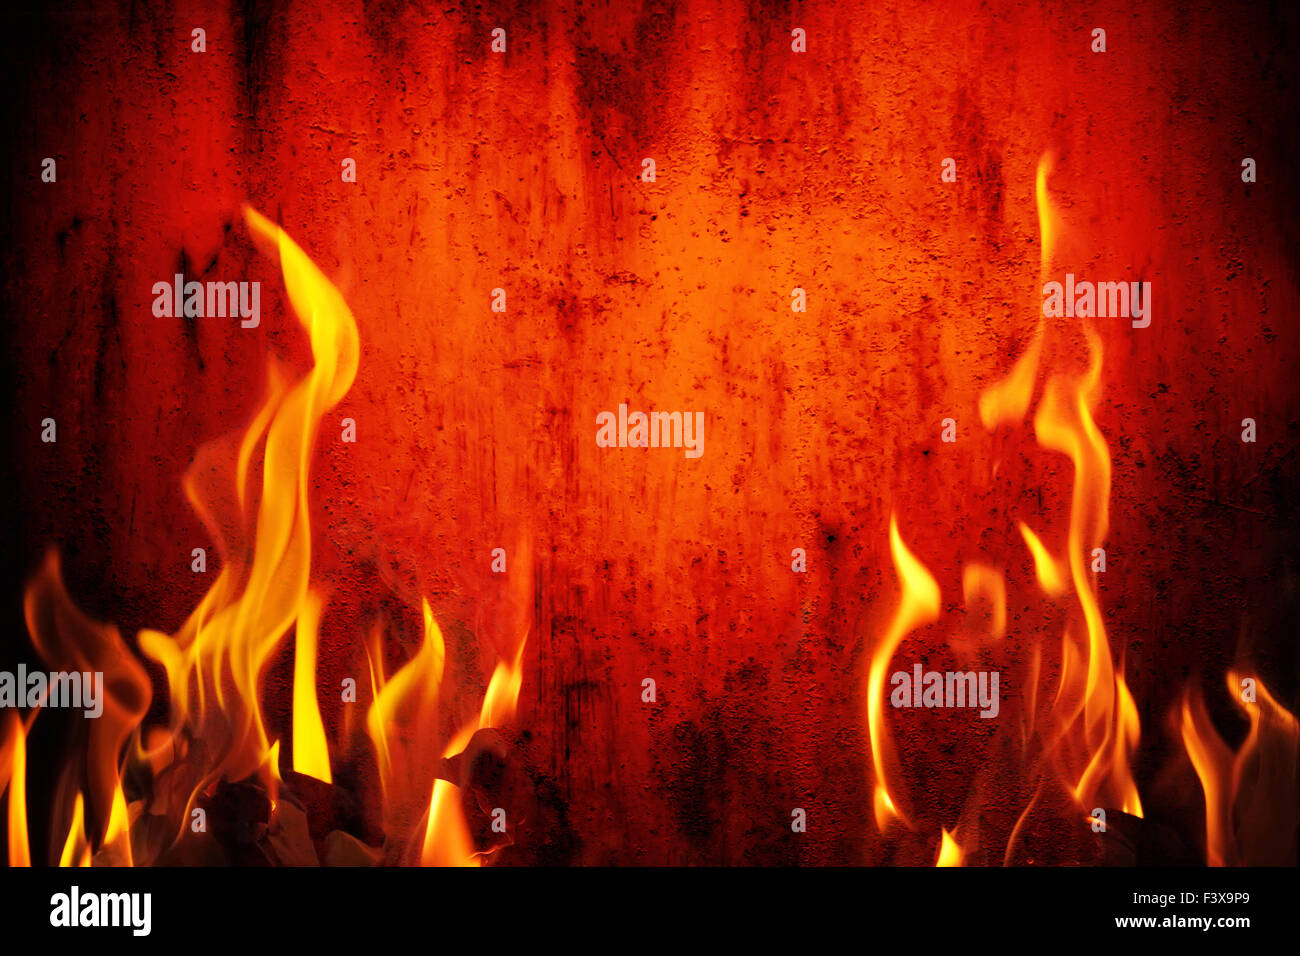 Grunge fire wall background Stock Photo